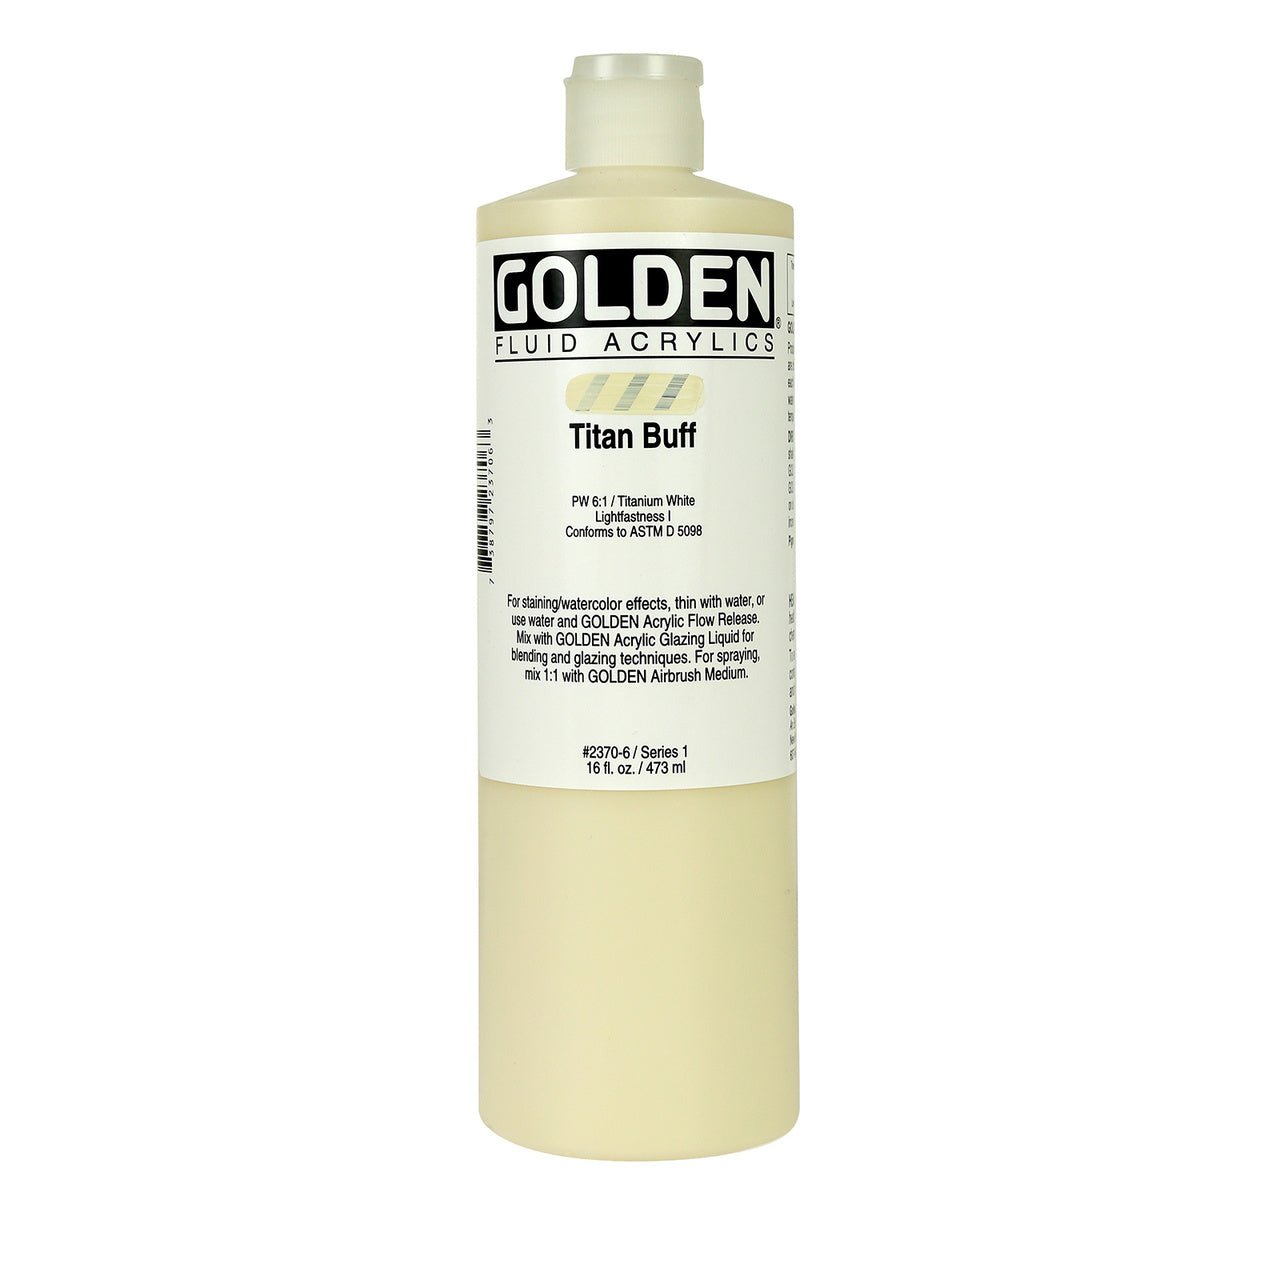 Golden Fluid Acrylic Titan Buff 16 oz - merriartist.com